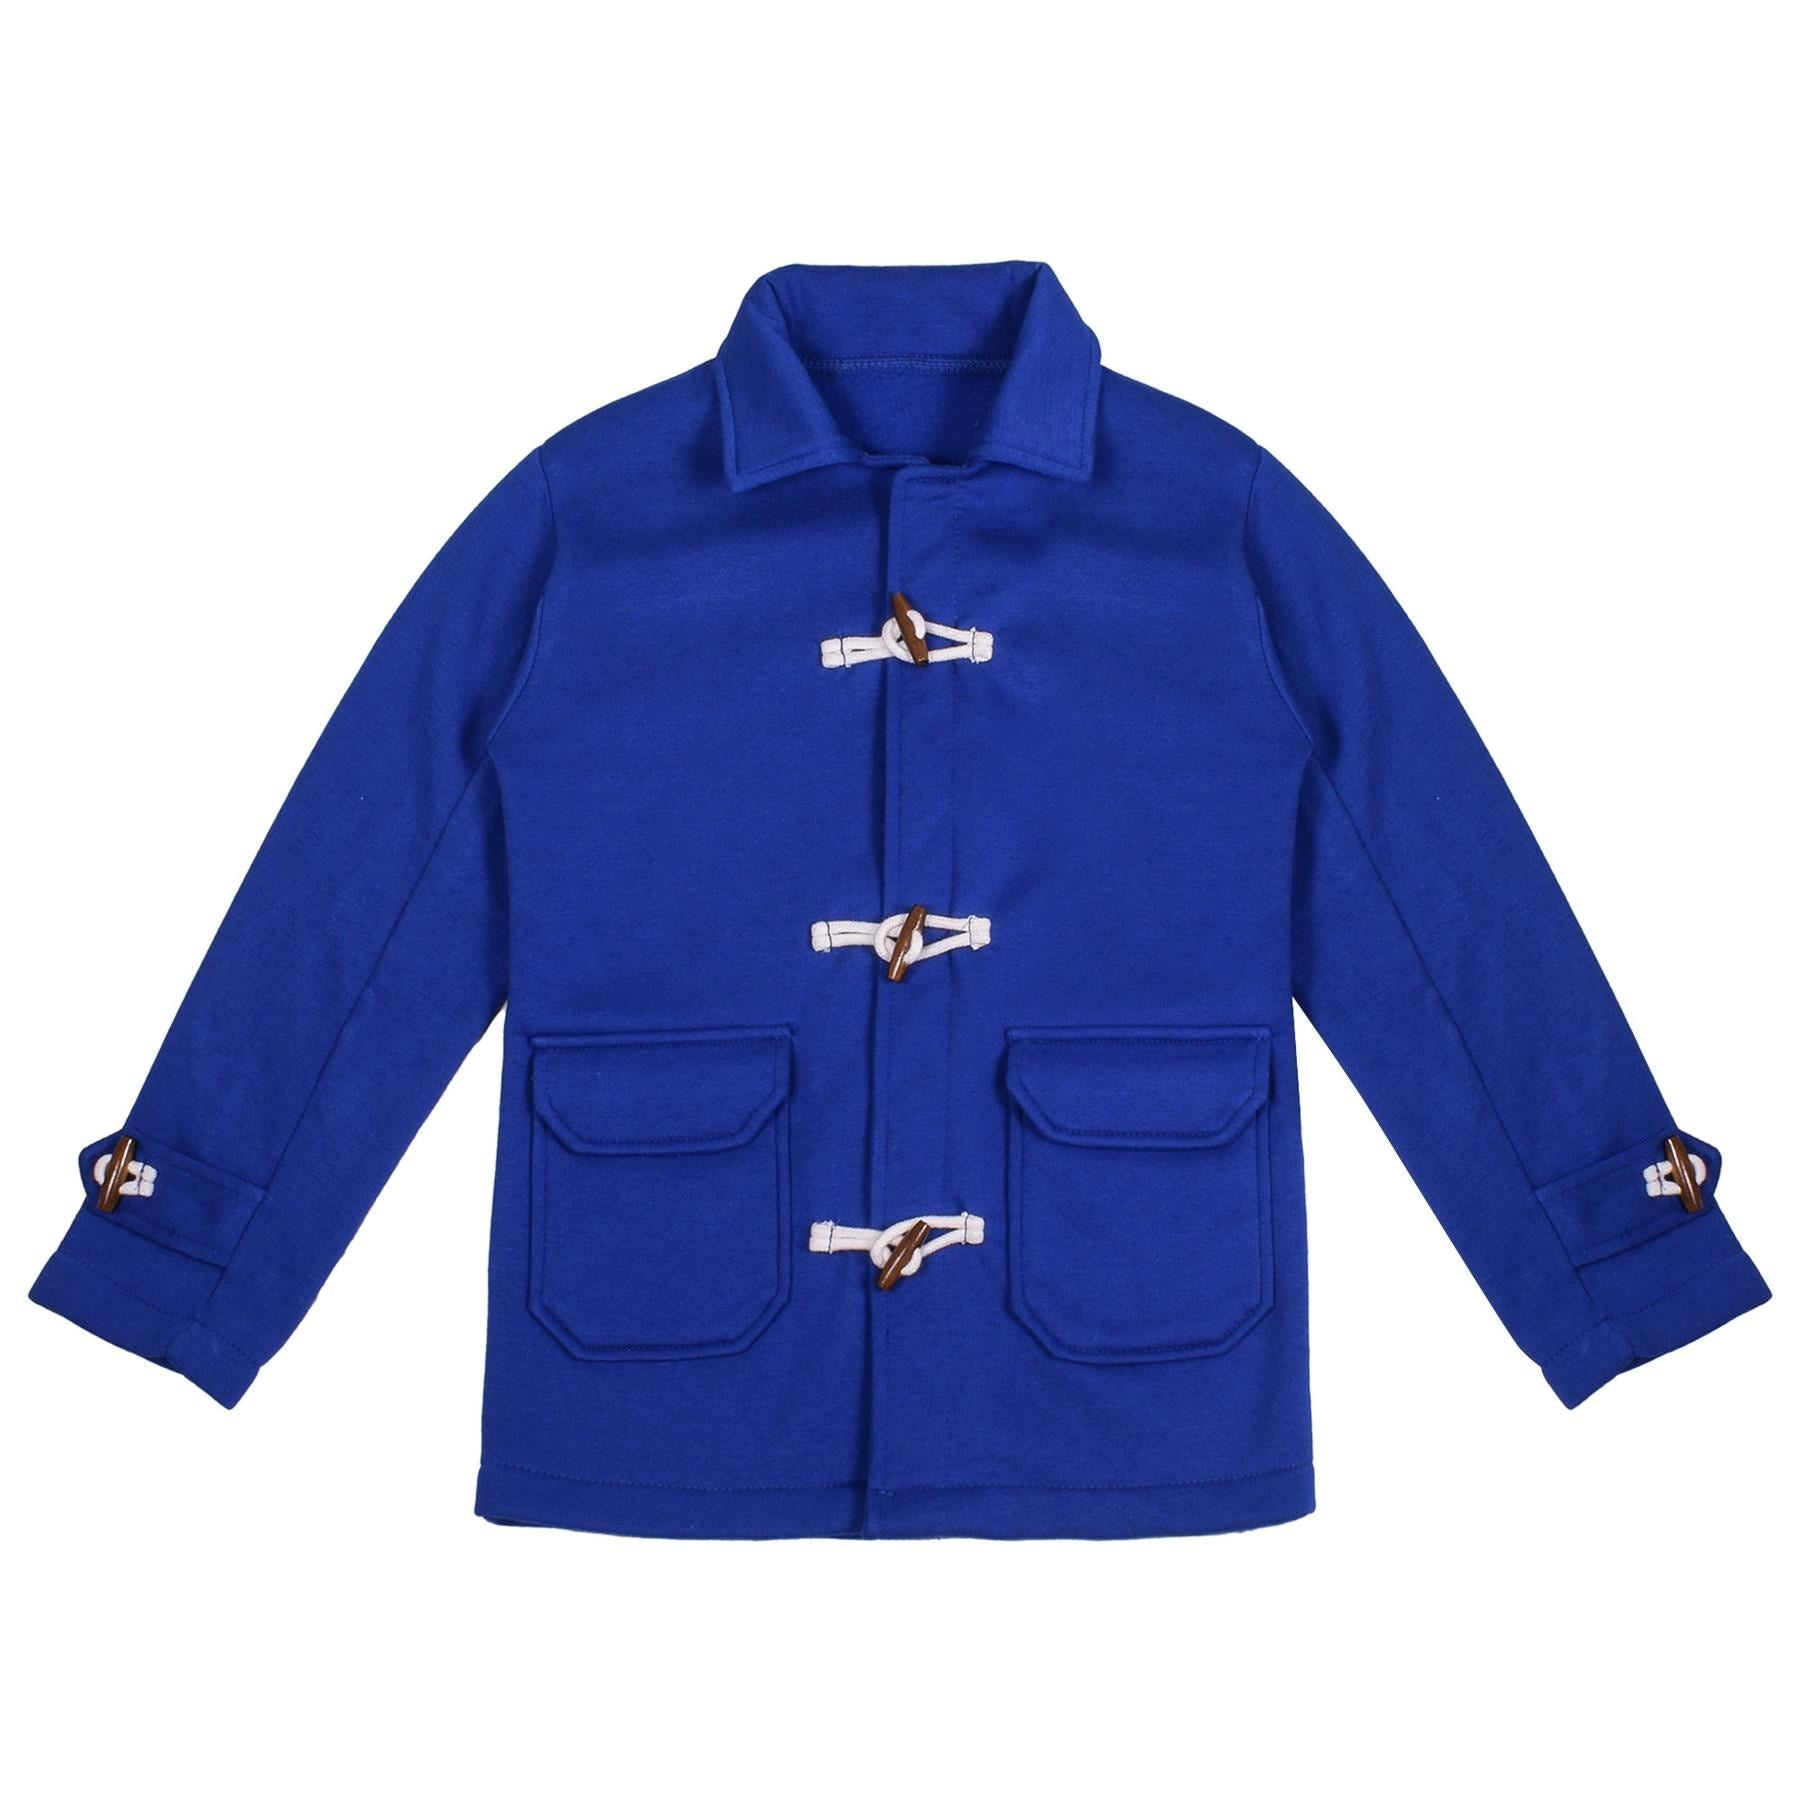 Kids Girls Boys Plain Royal Duffle Coat Fleece Long Sleeves Jacket Age 7-13 Years